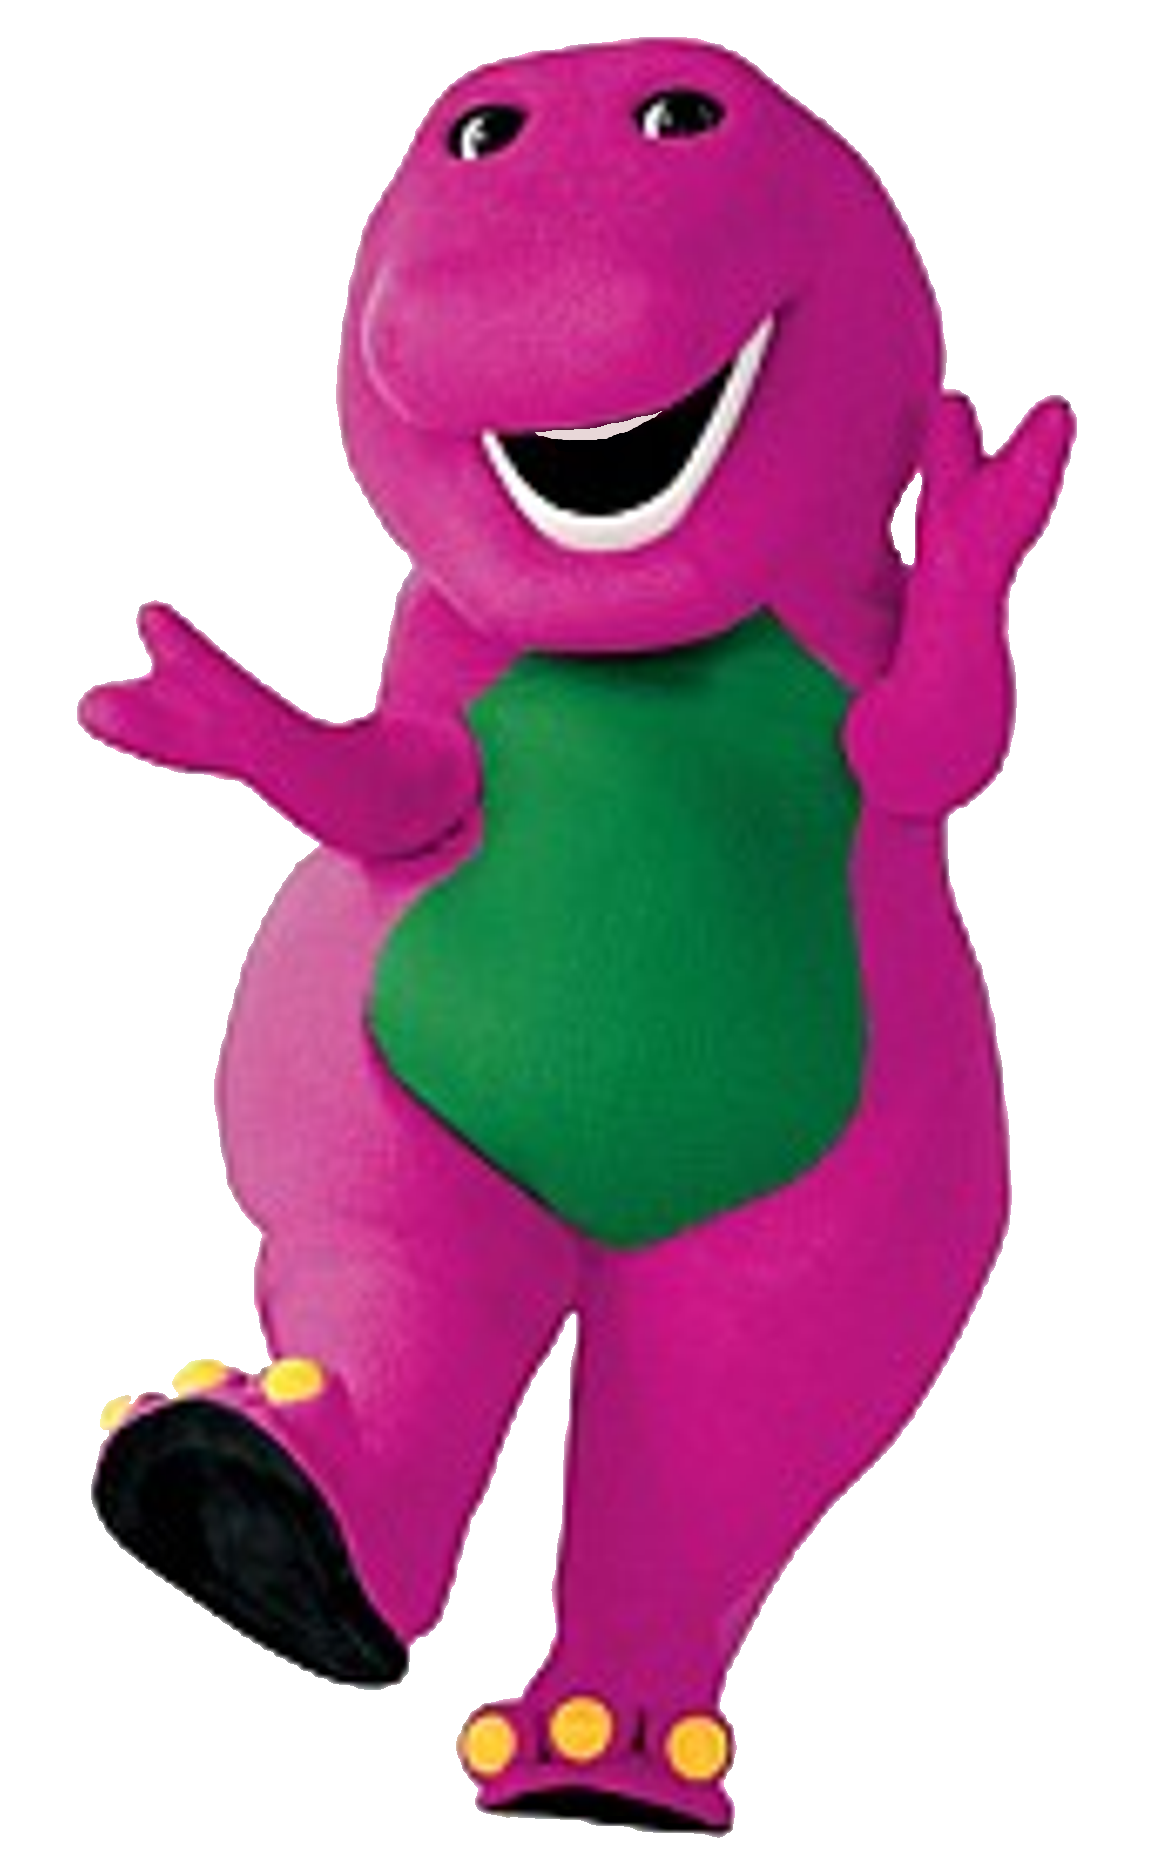 Image barney the dinosaur. Dinosaurs clipart pink purple